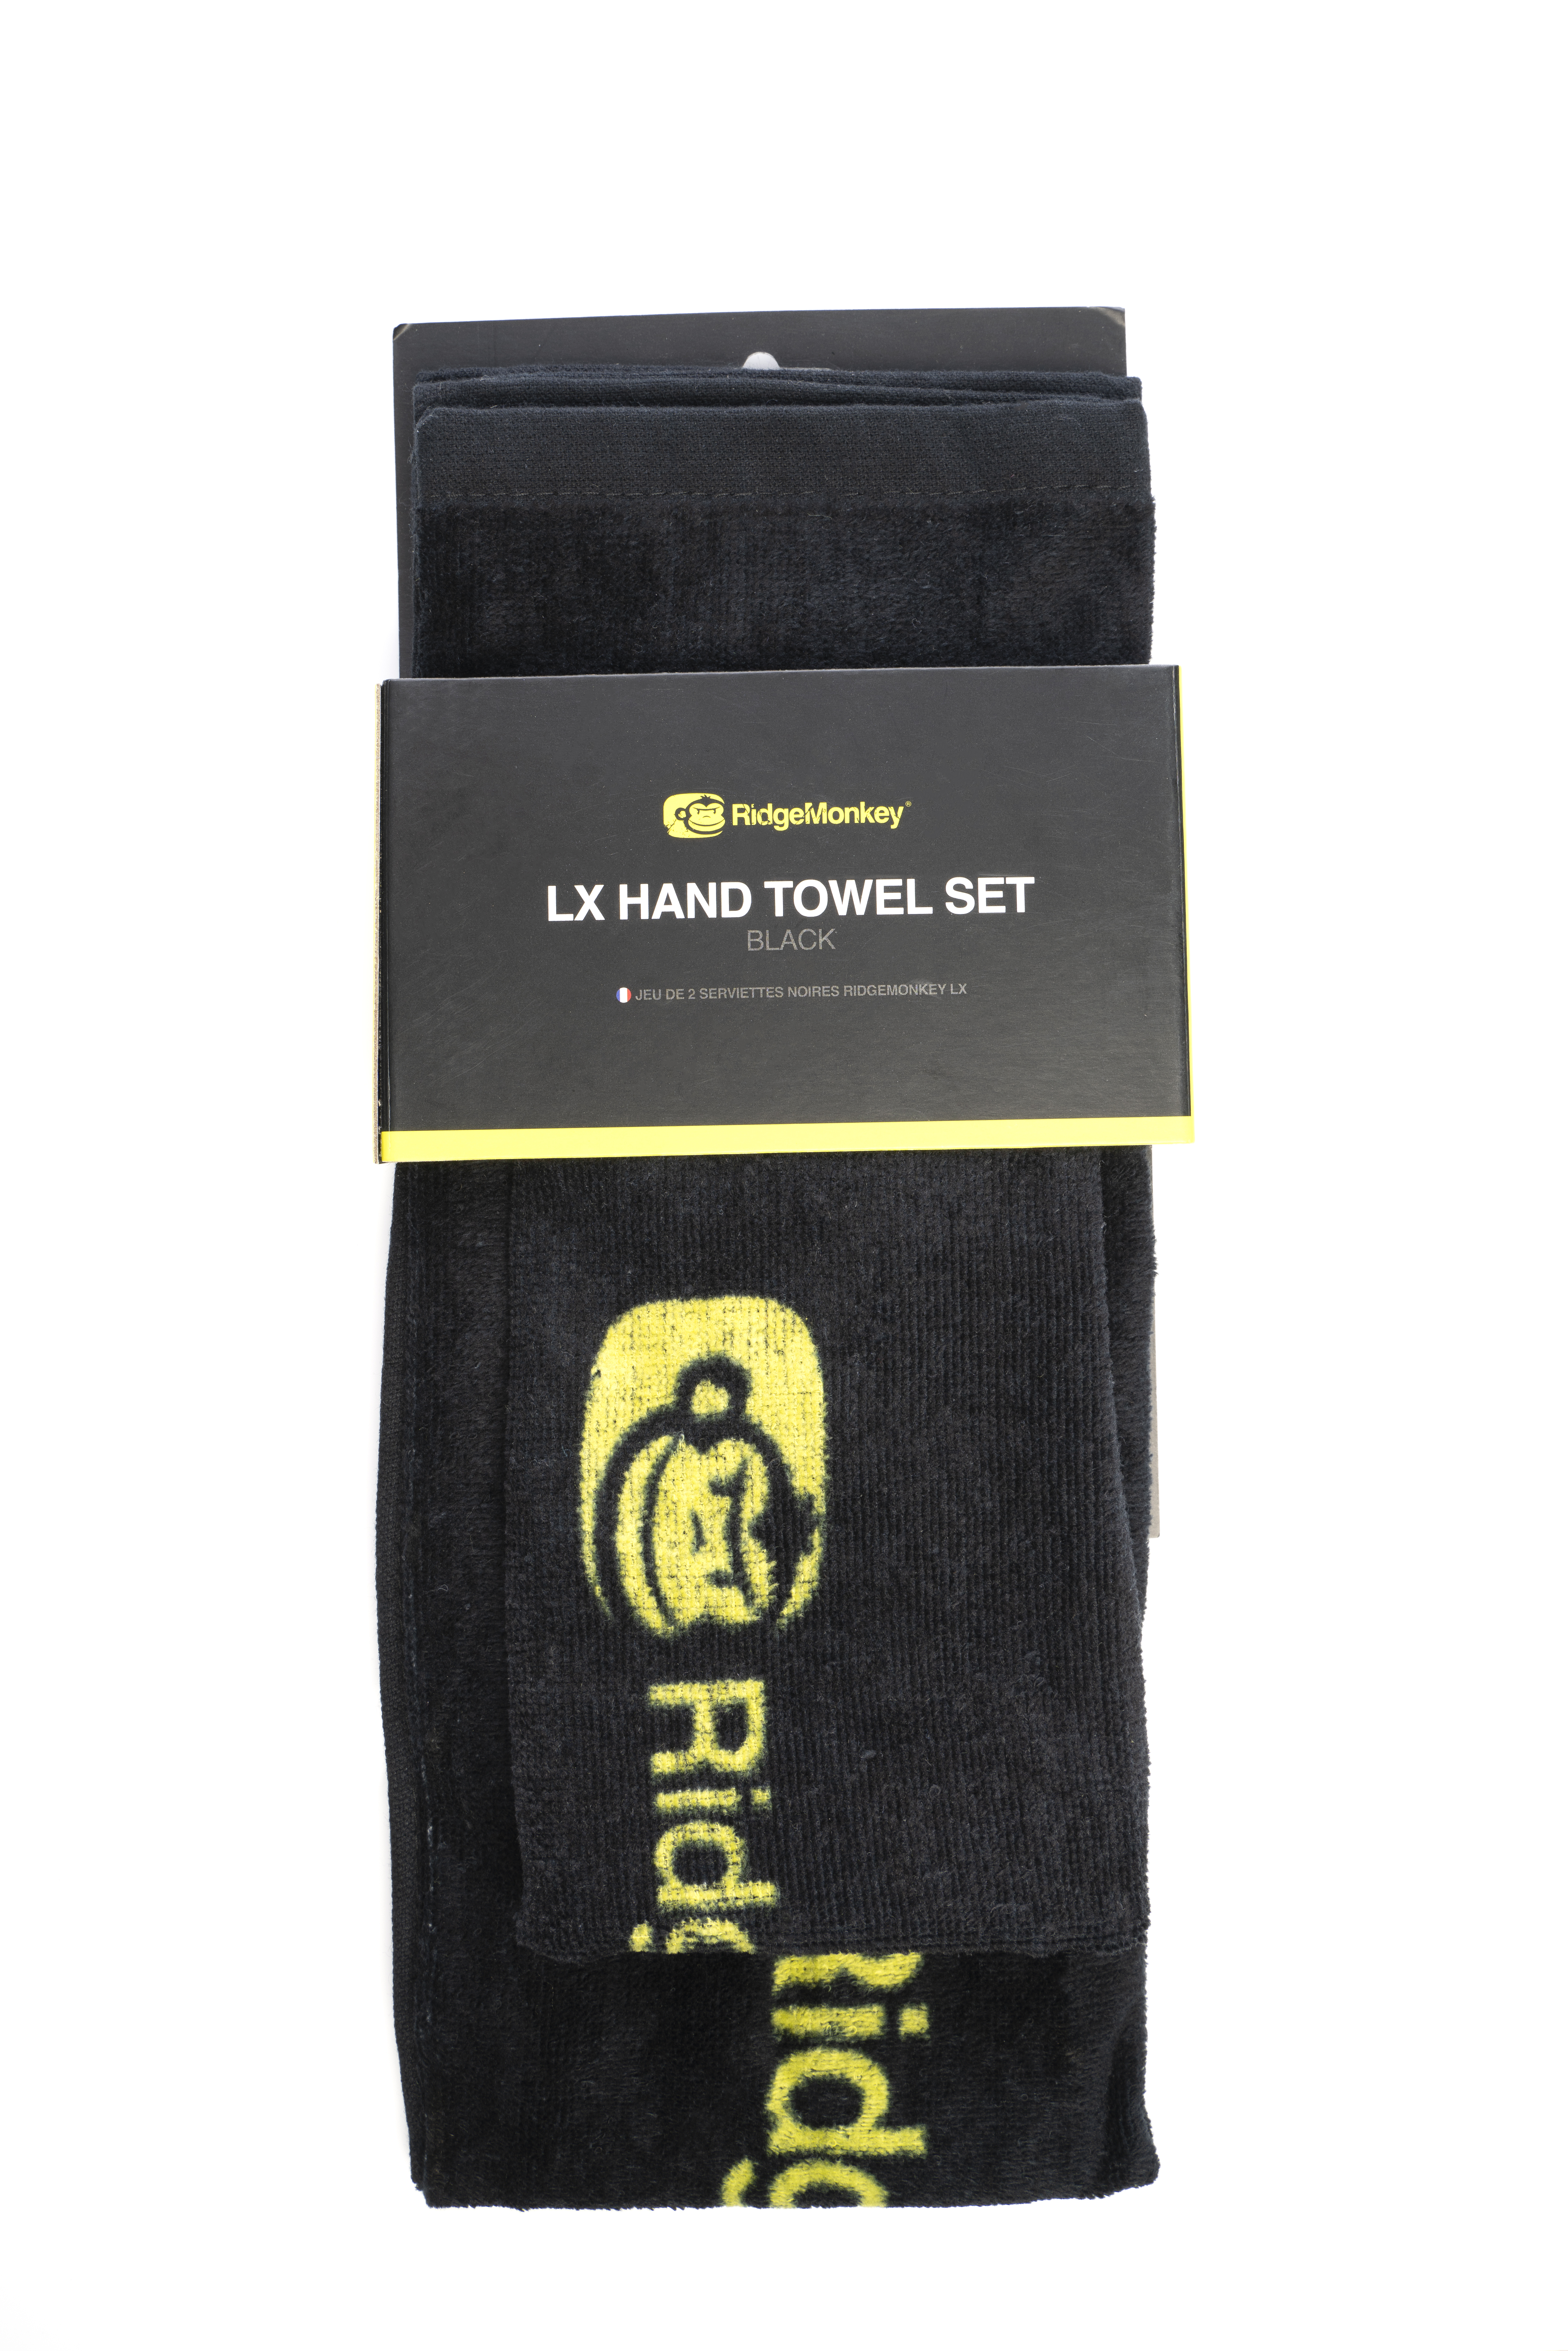 Ridgemonkey LX Hand Towel Set Black